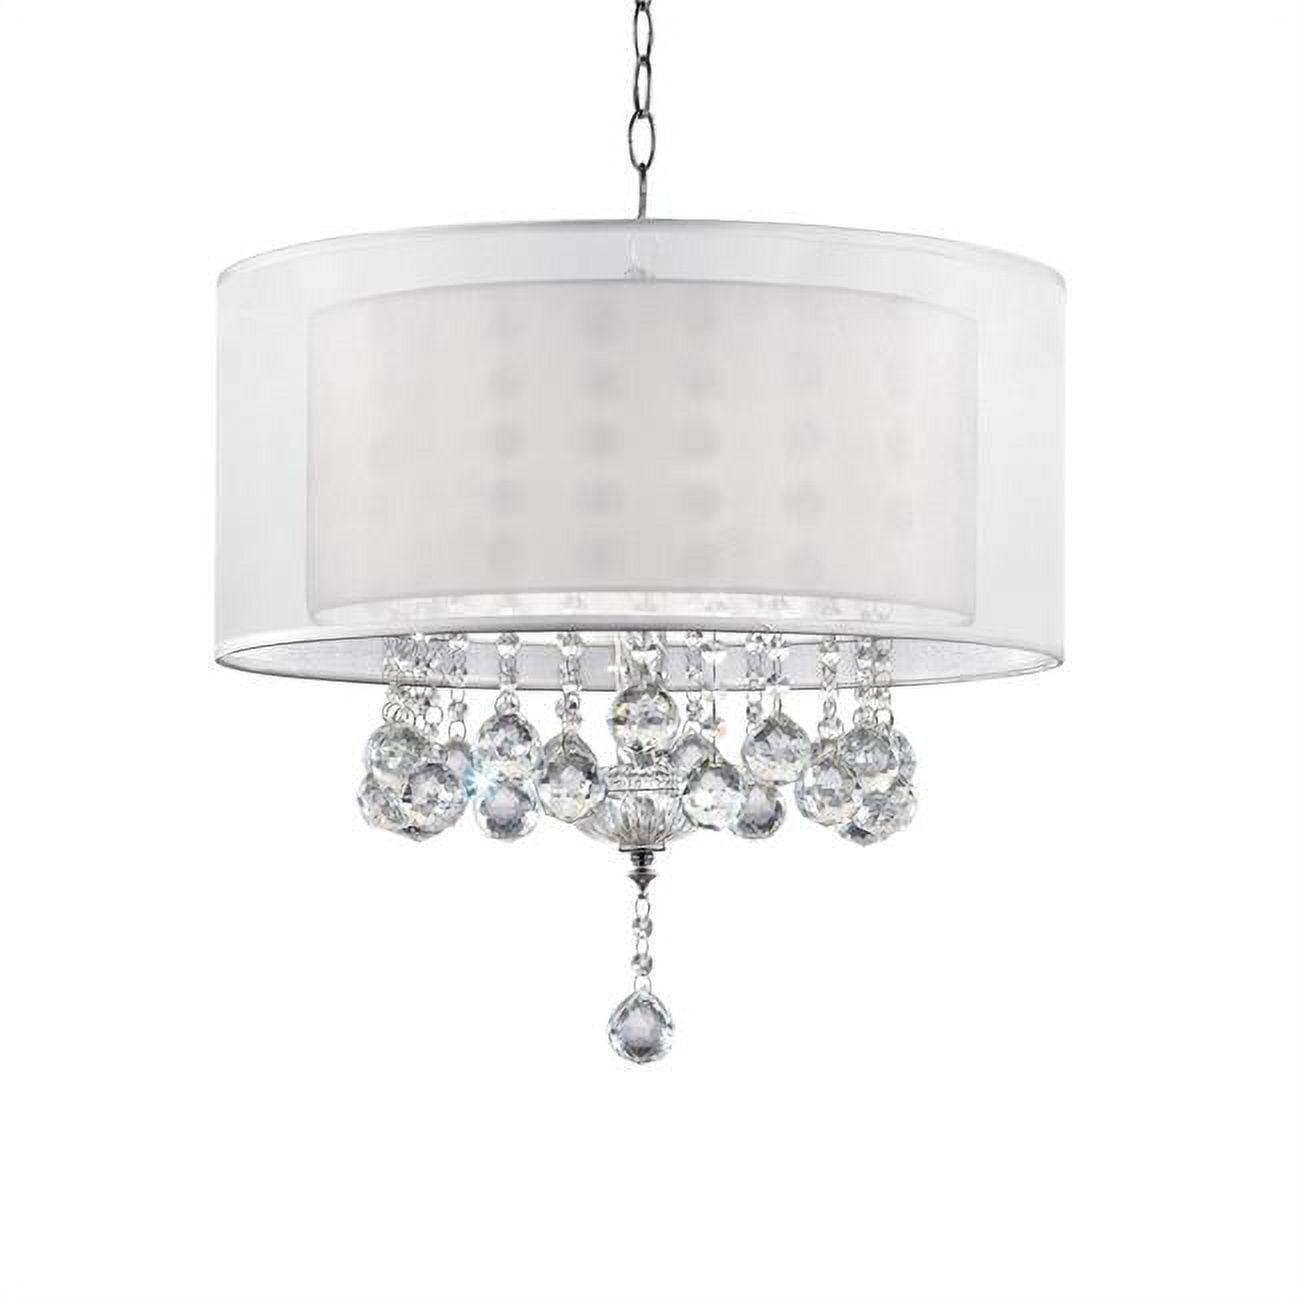 Elegant Chrome Drum Ceiling Lamp with Crystal Embellishments